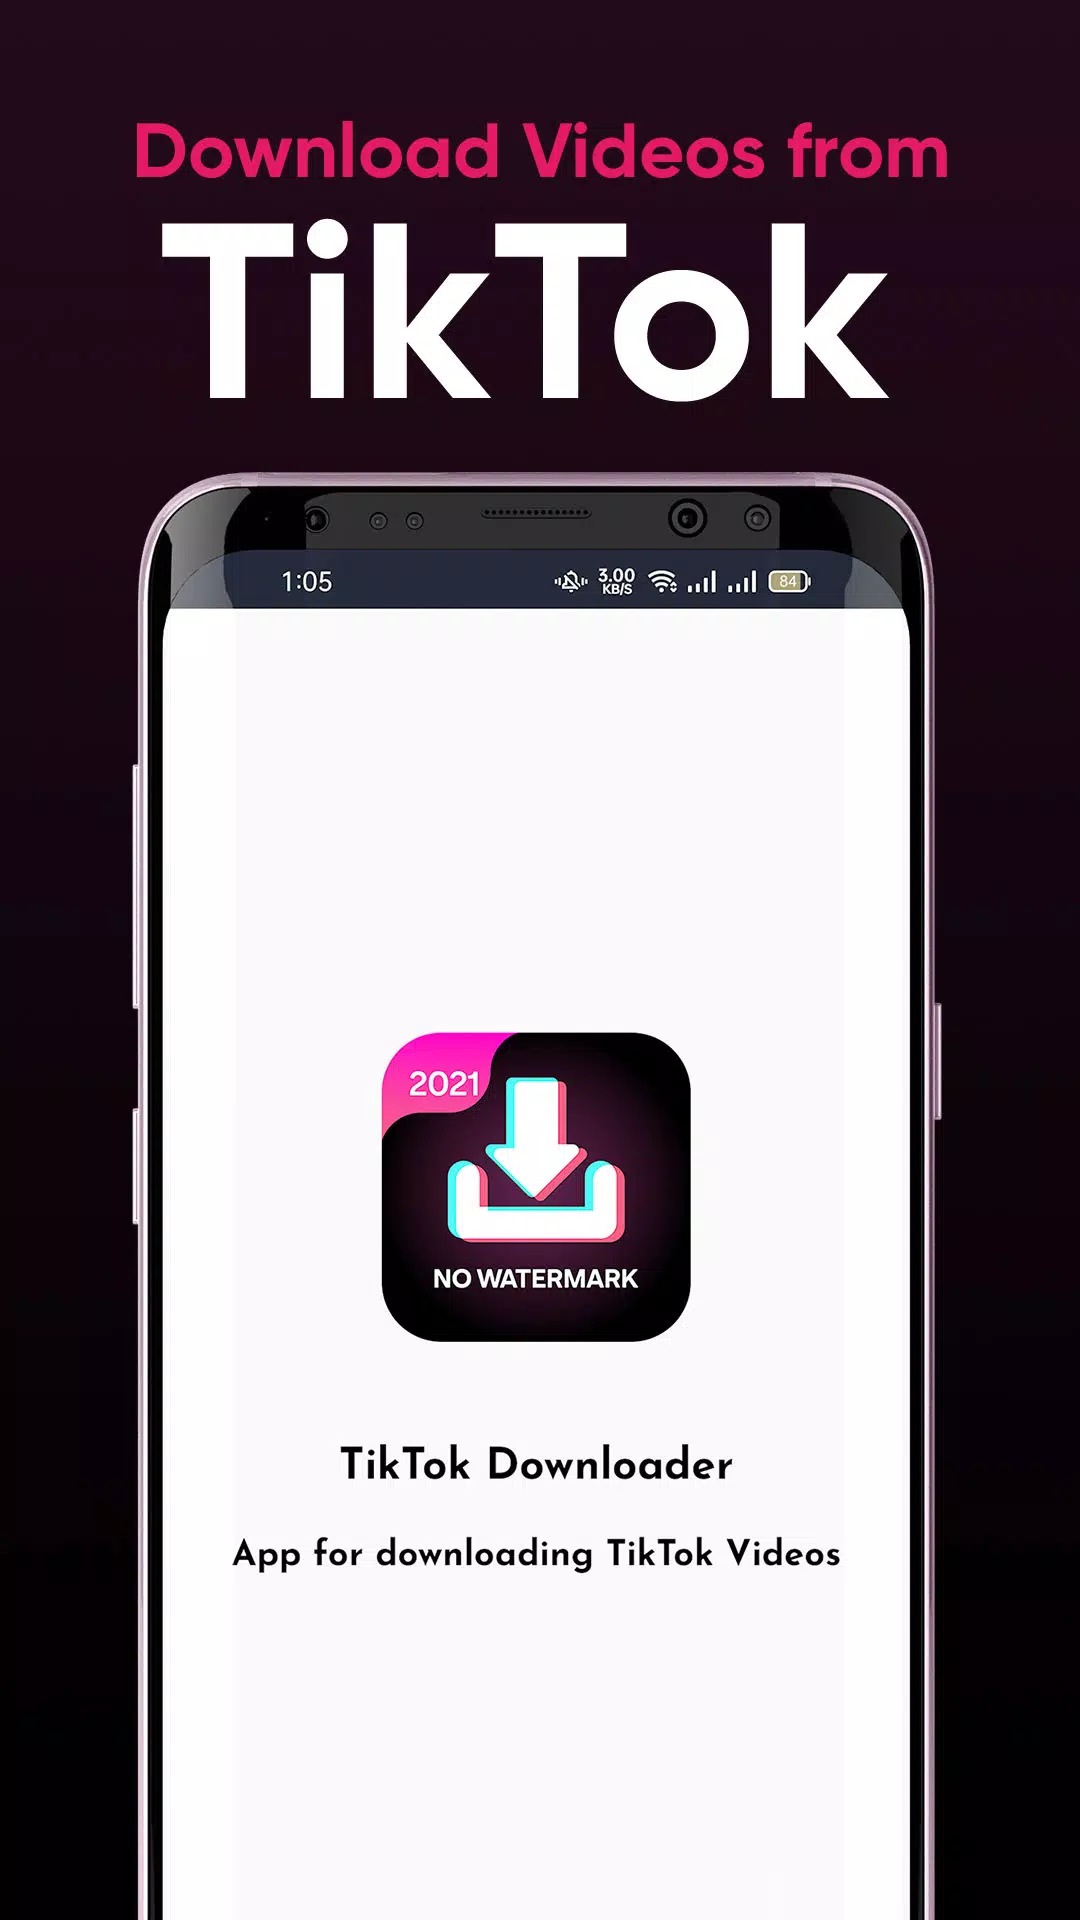 Free TikTok Downloader without Watermark – Download Video TikTok